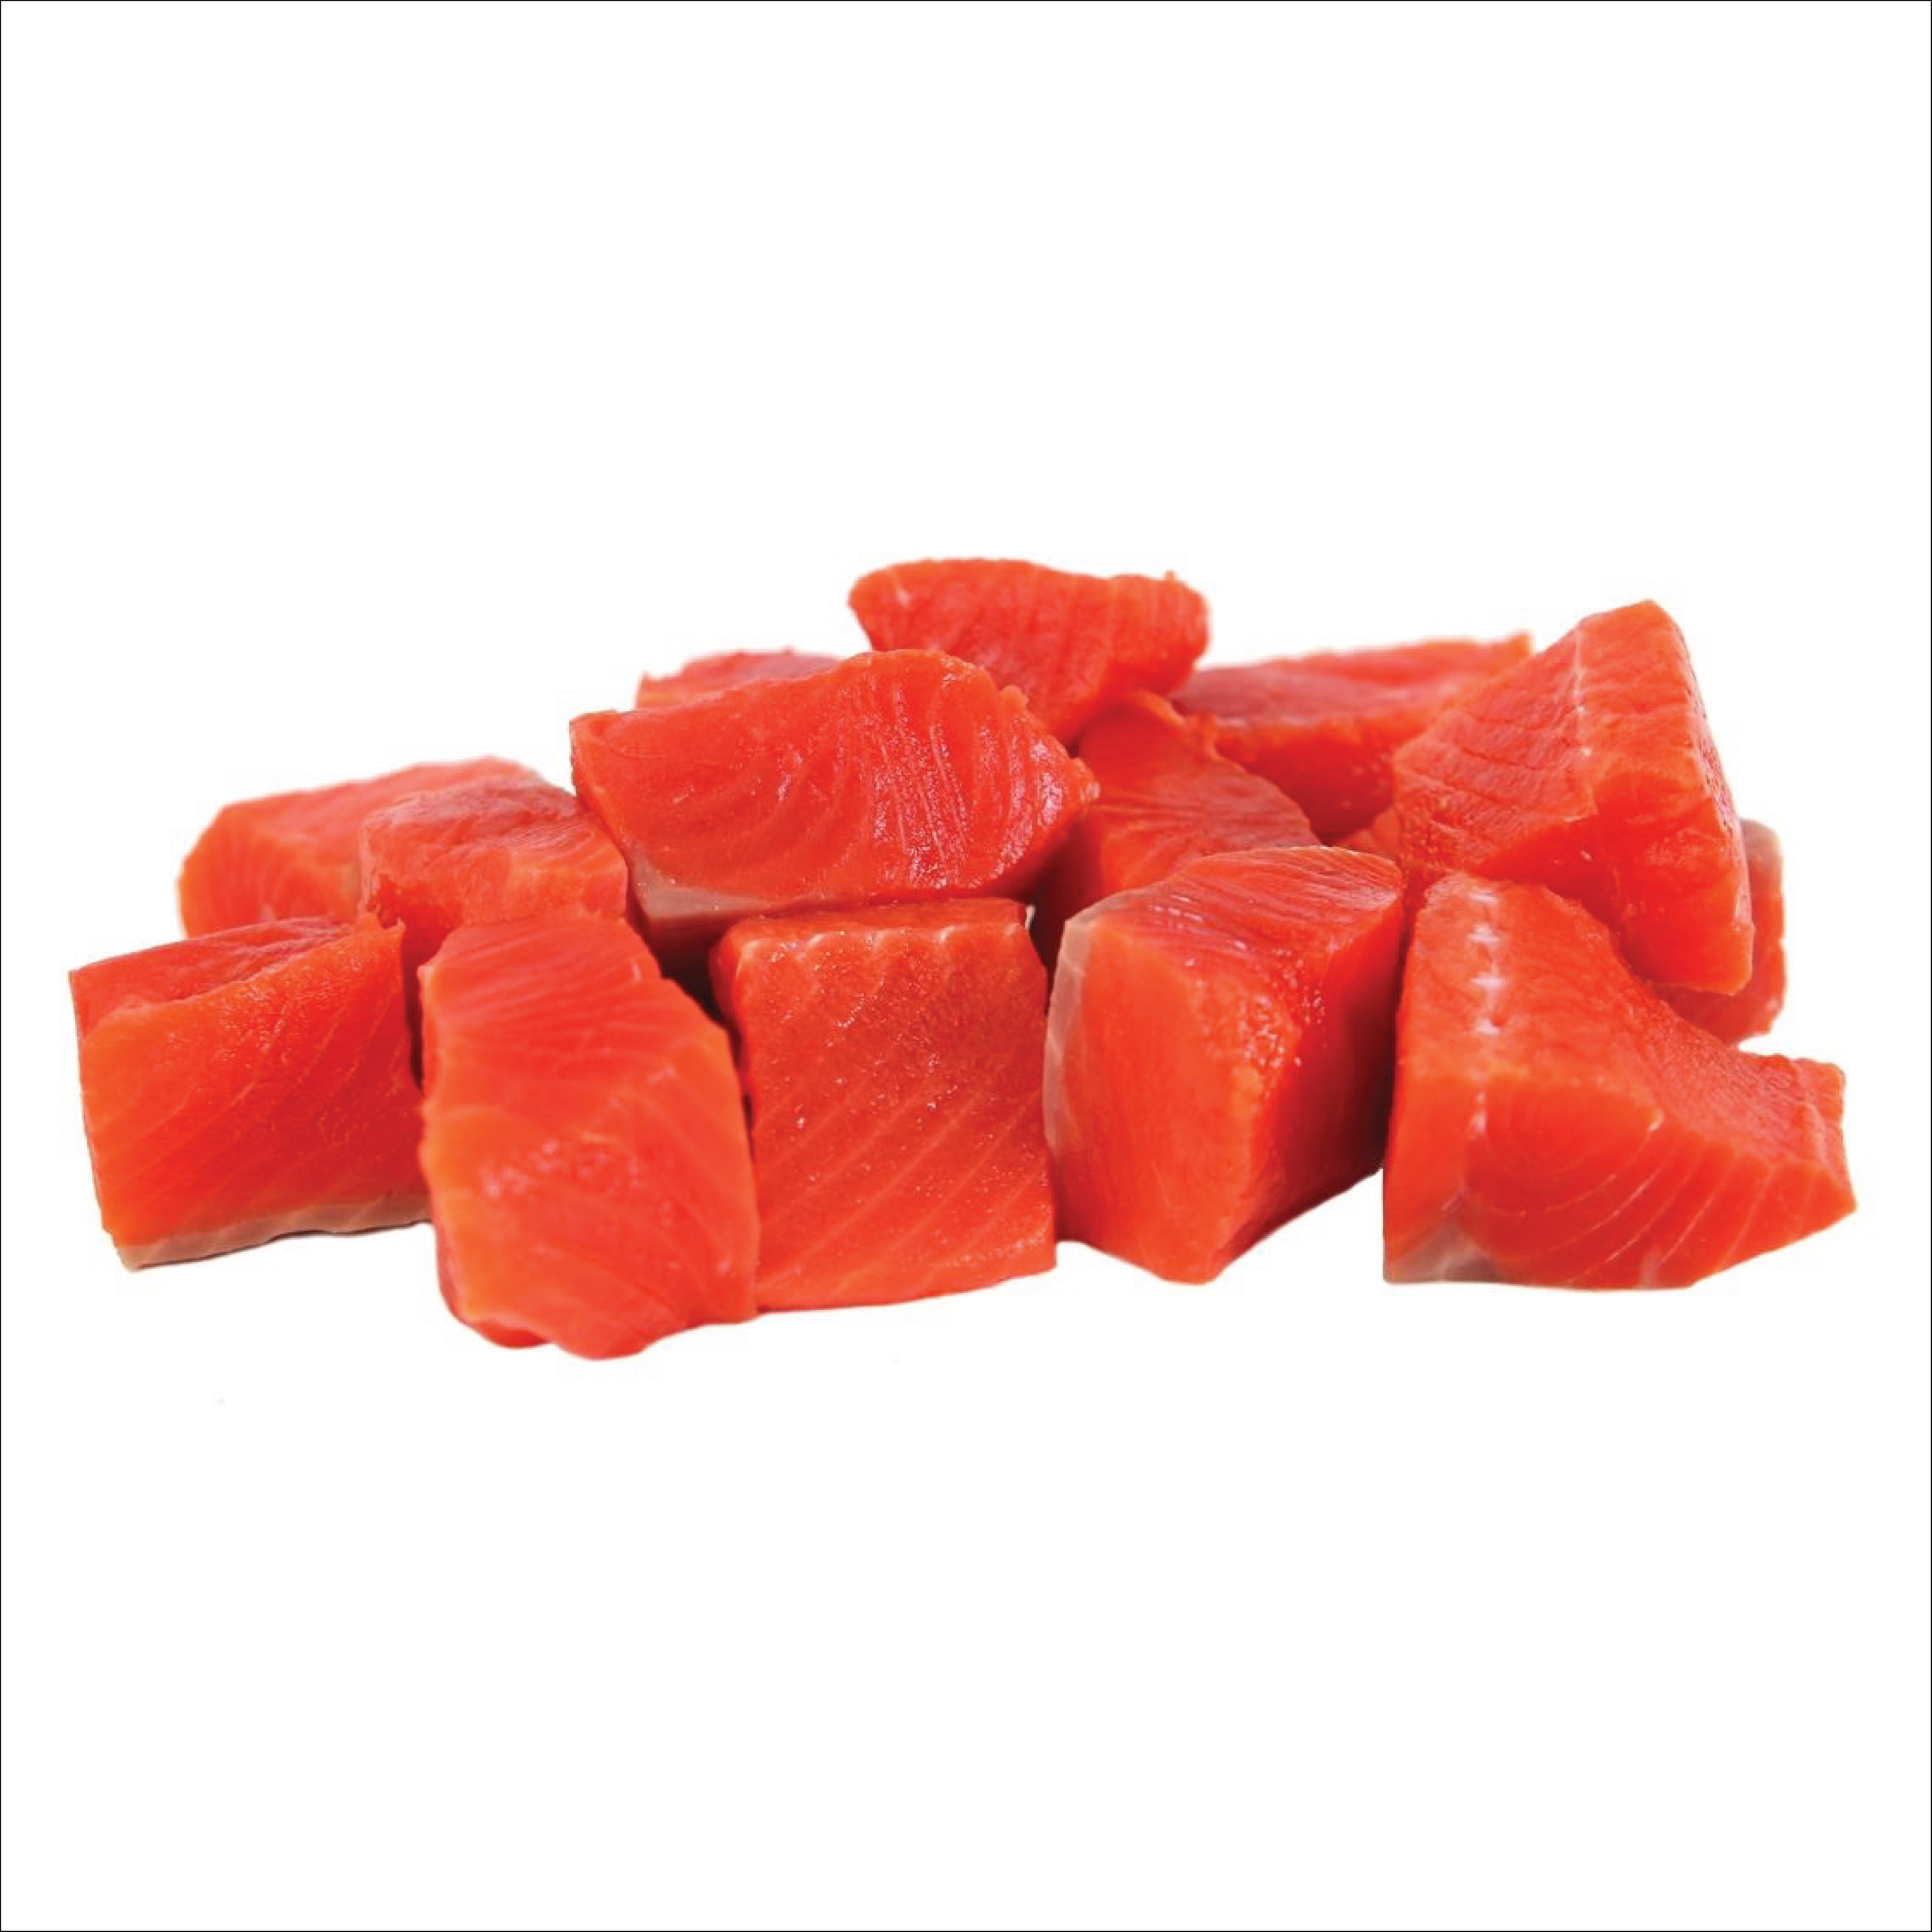 Wild Sockeye Salmon Steak Cubes